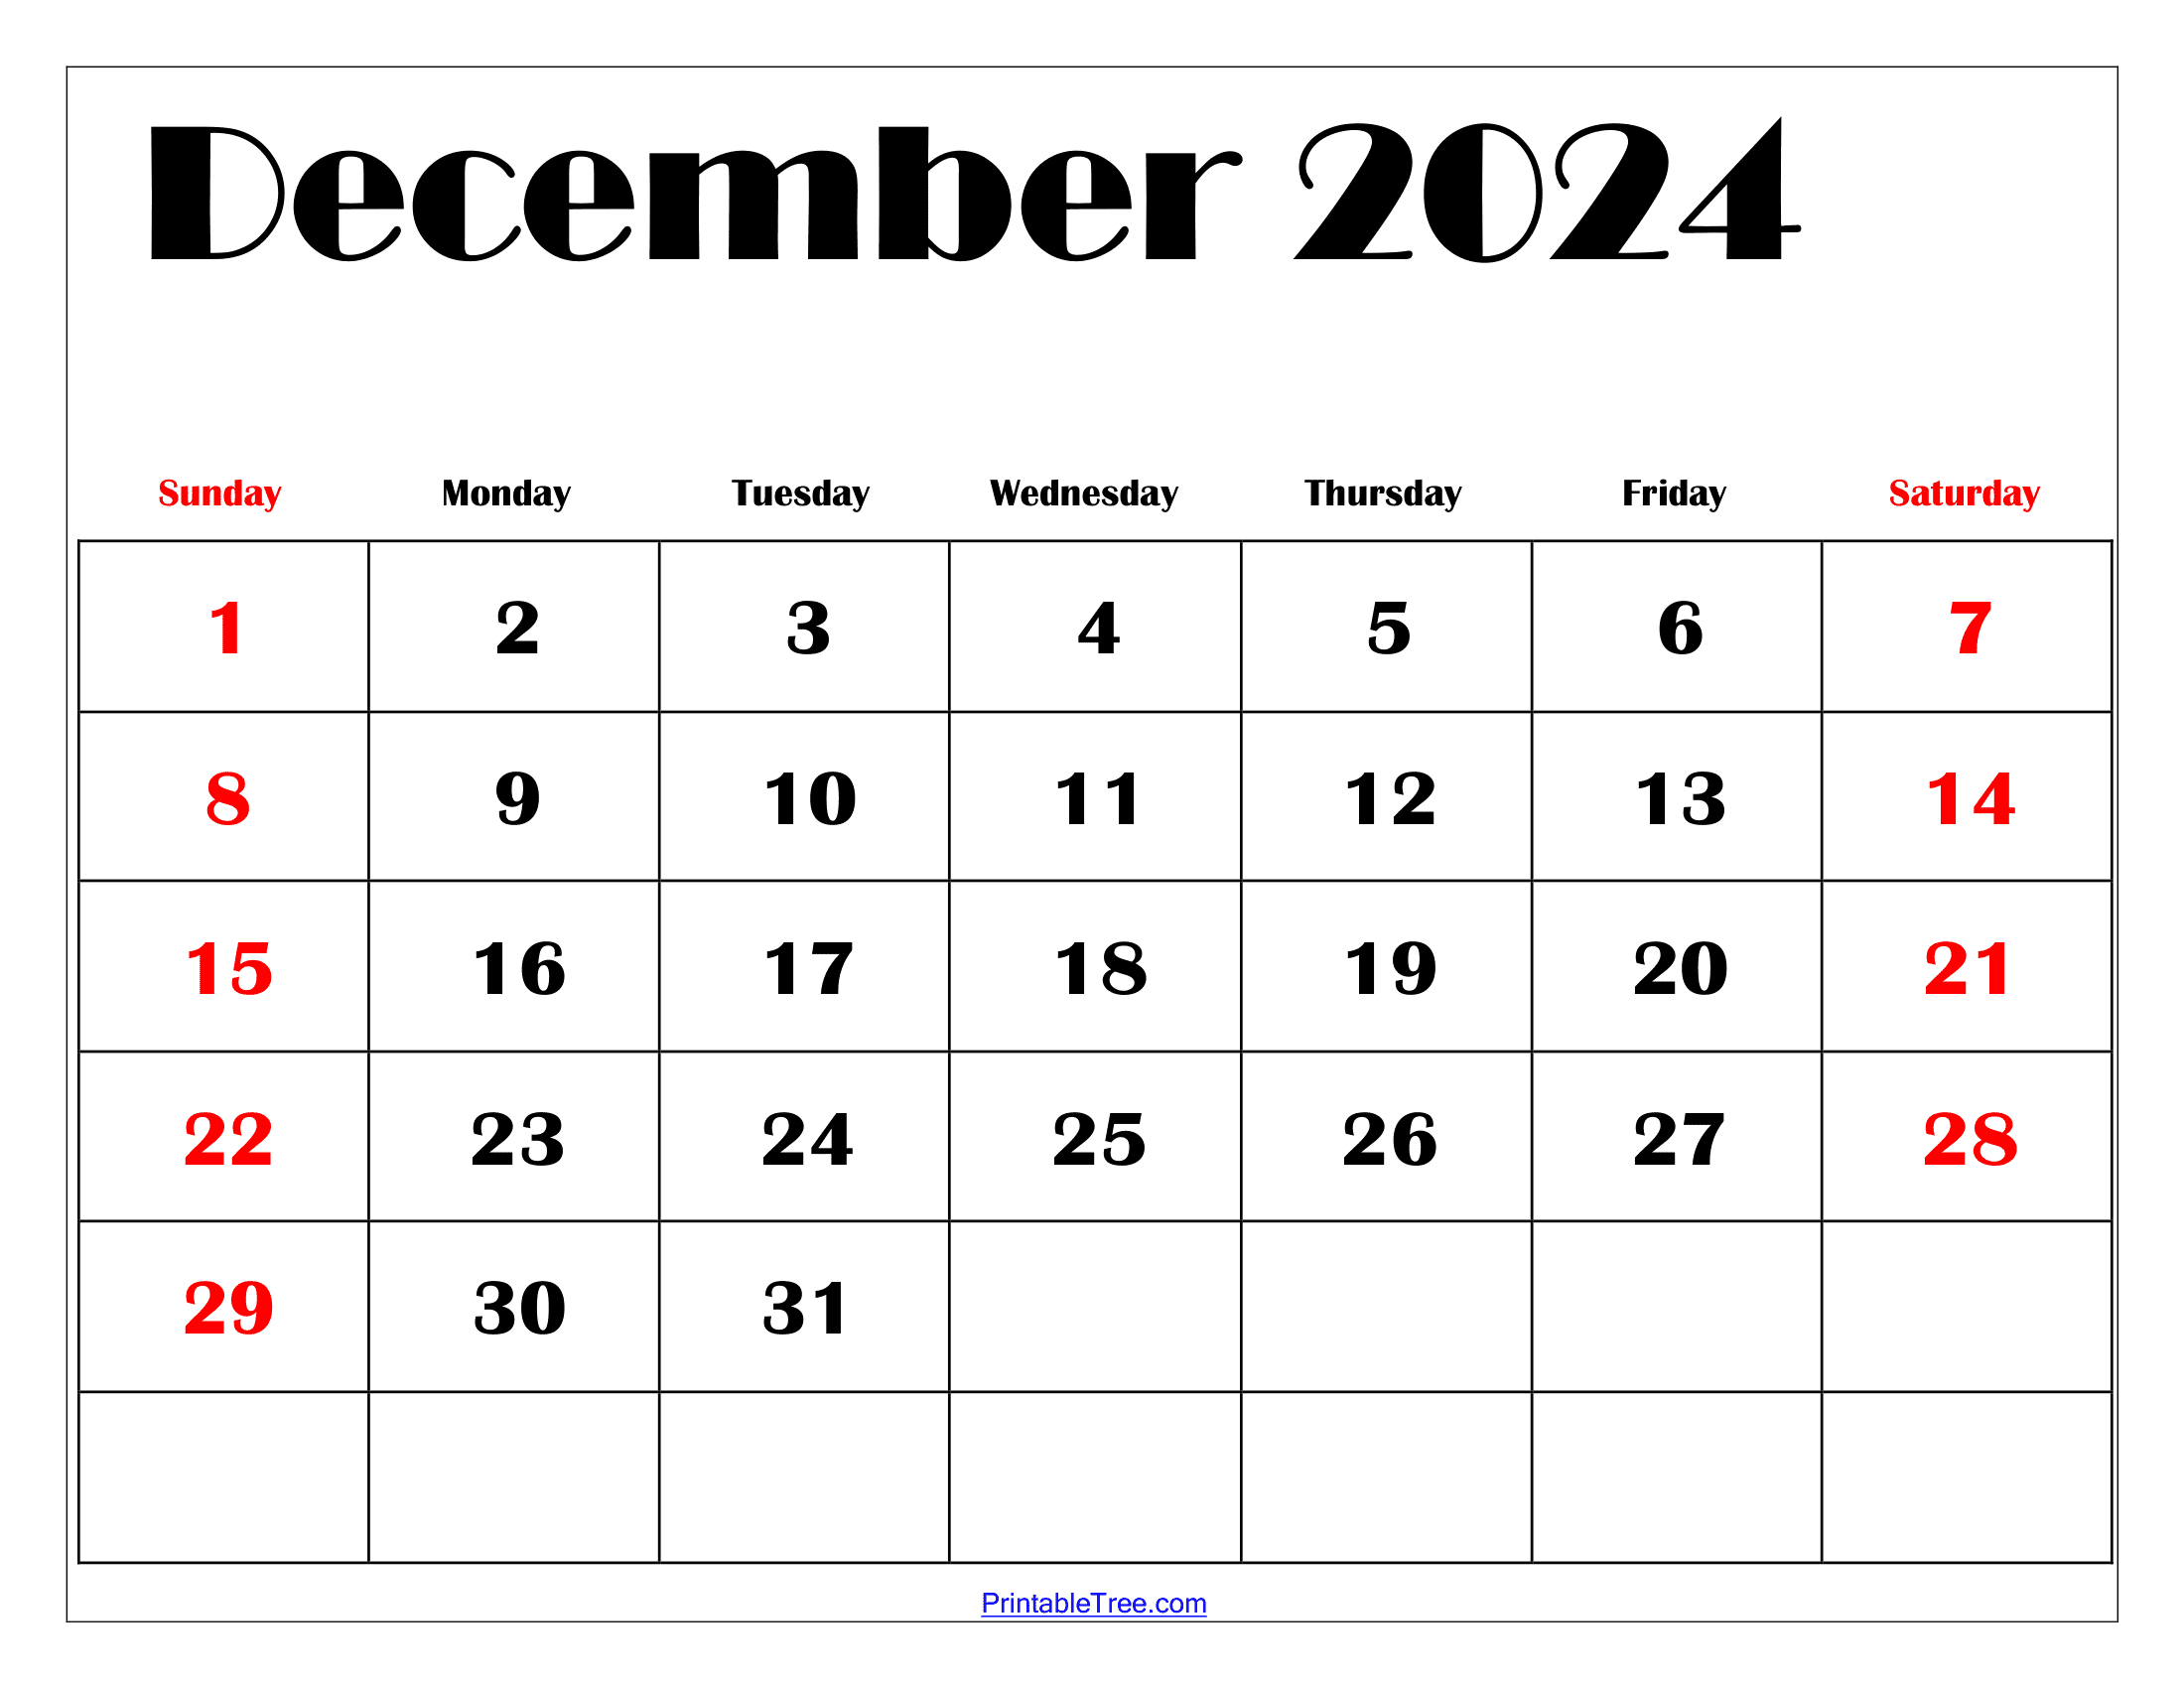 Printable Calendar December 2024 2024 Summer Solstice - Free Printable 2024 Calendar December 24calendars